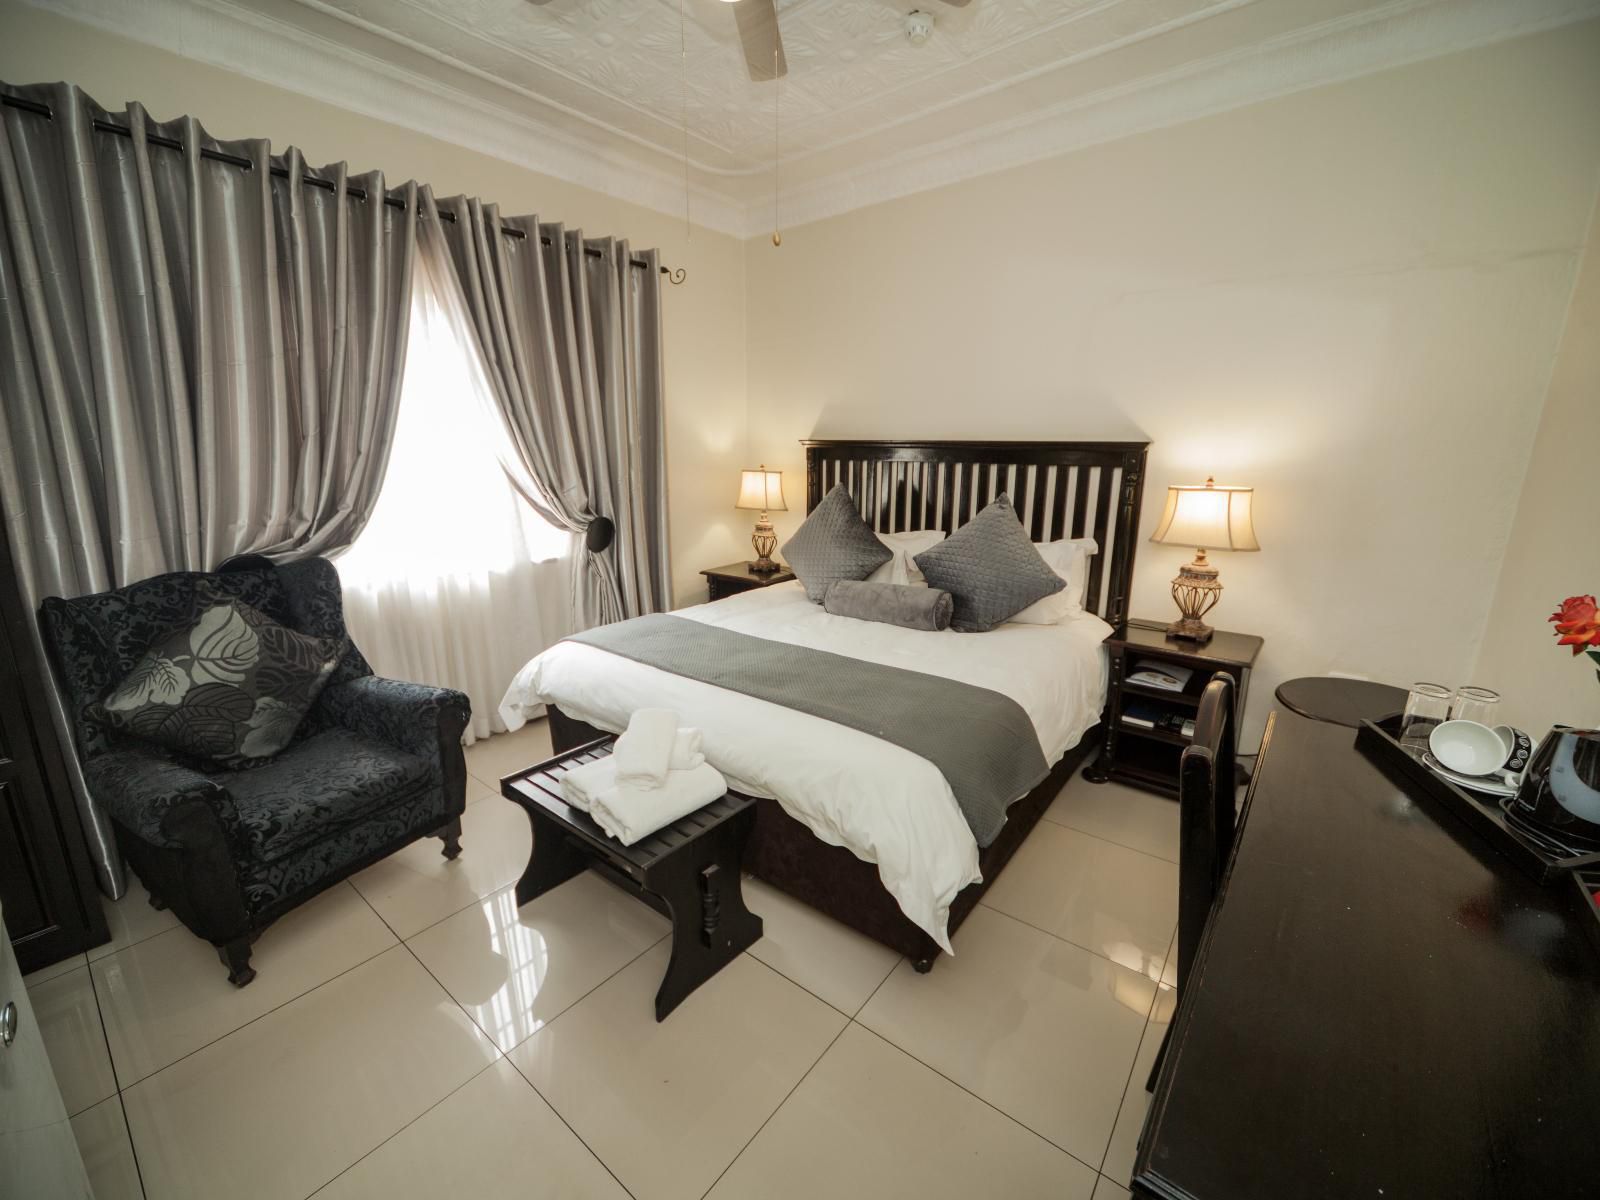 Dunwoodie Travel Lodge Waverley Pretoria Pretoria Tshwane Gauteng South Africa Sepia Tones, Bedroom